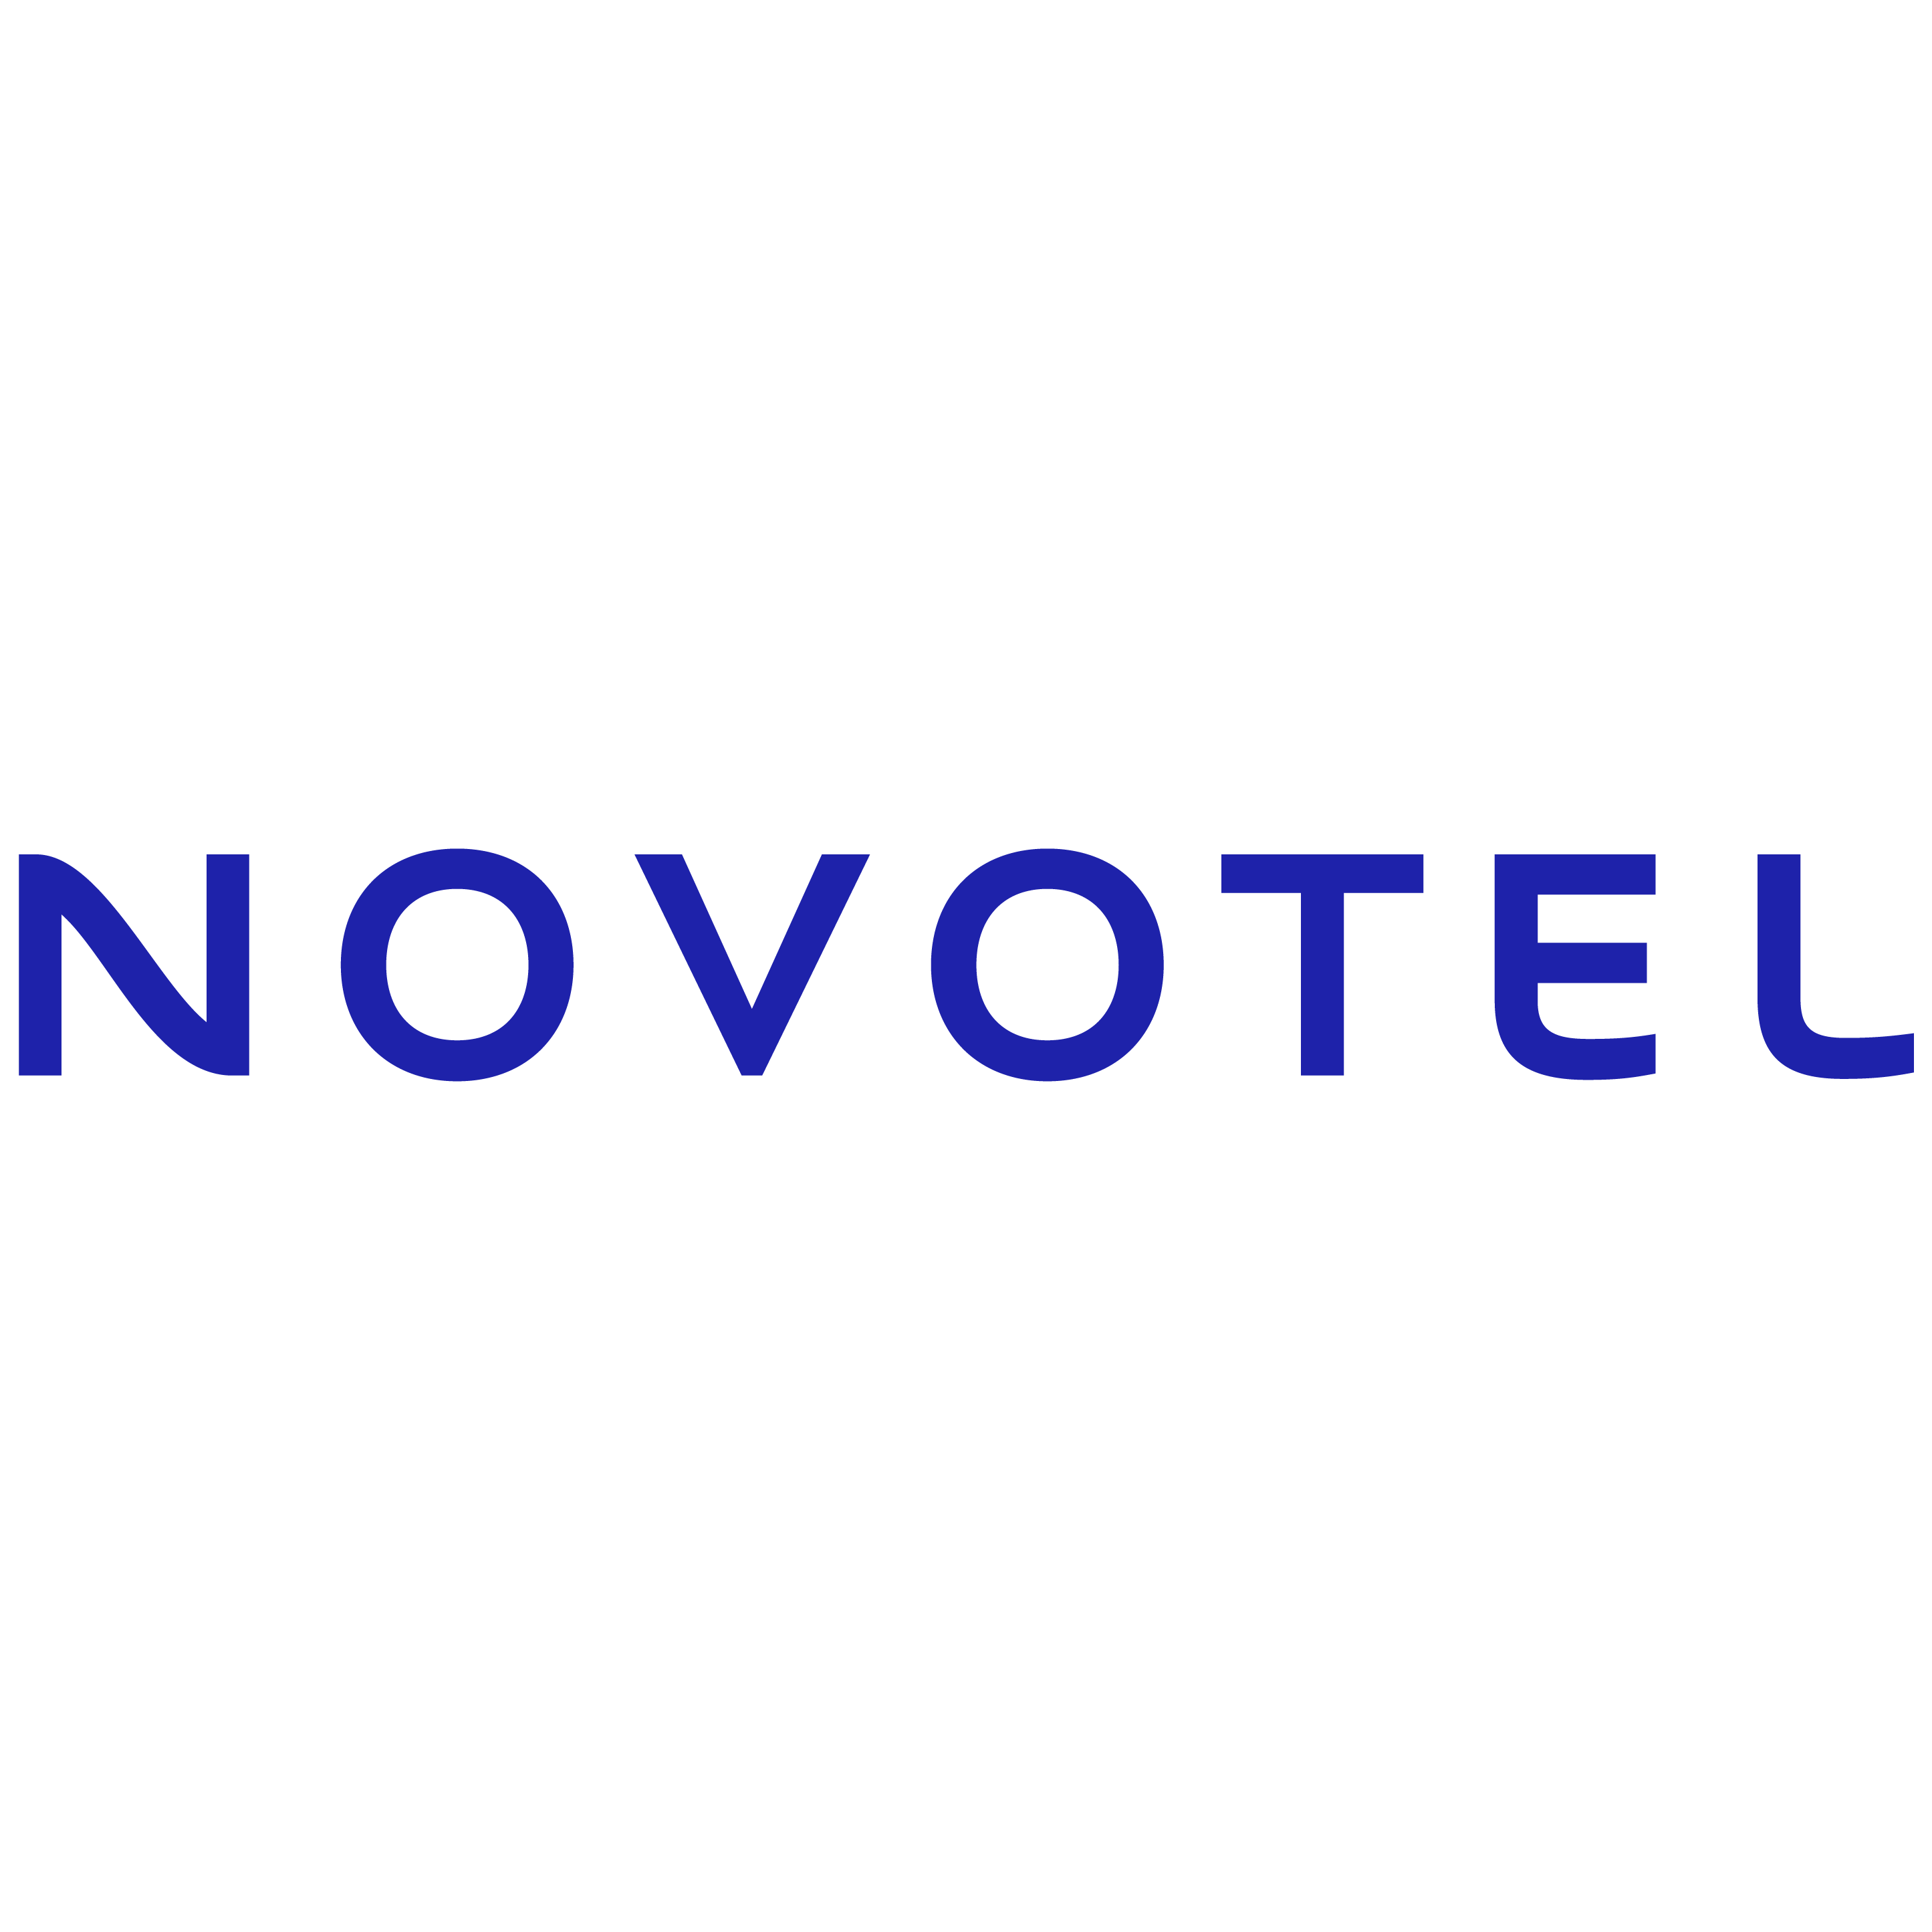 Novotel Thalassa Le Touquet Logo